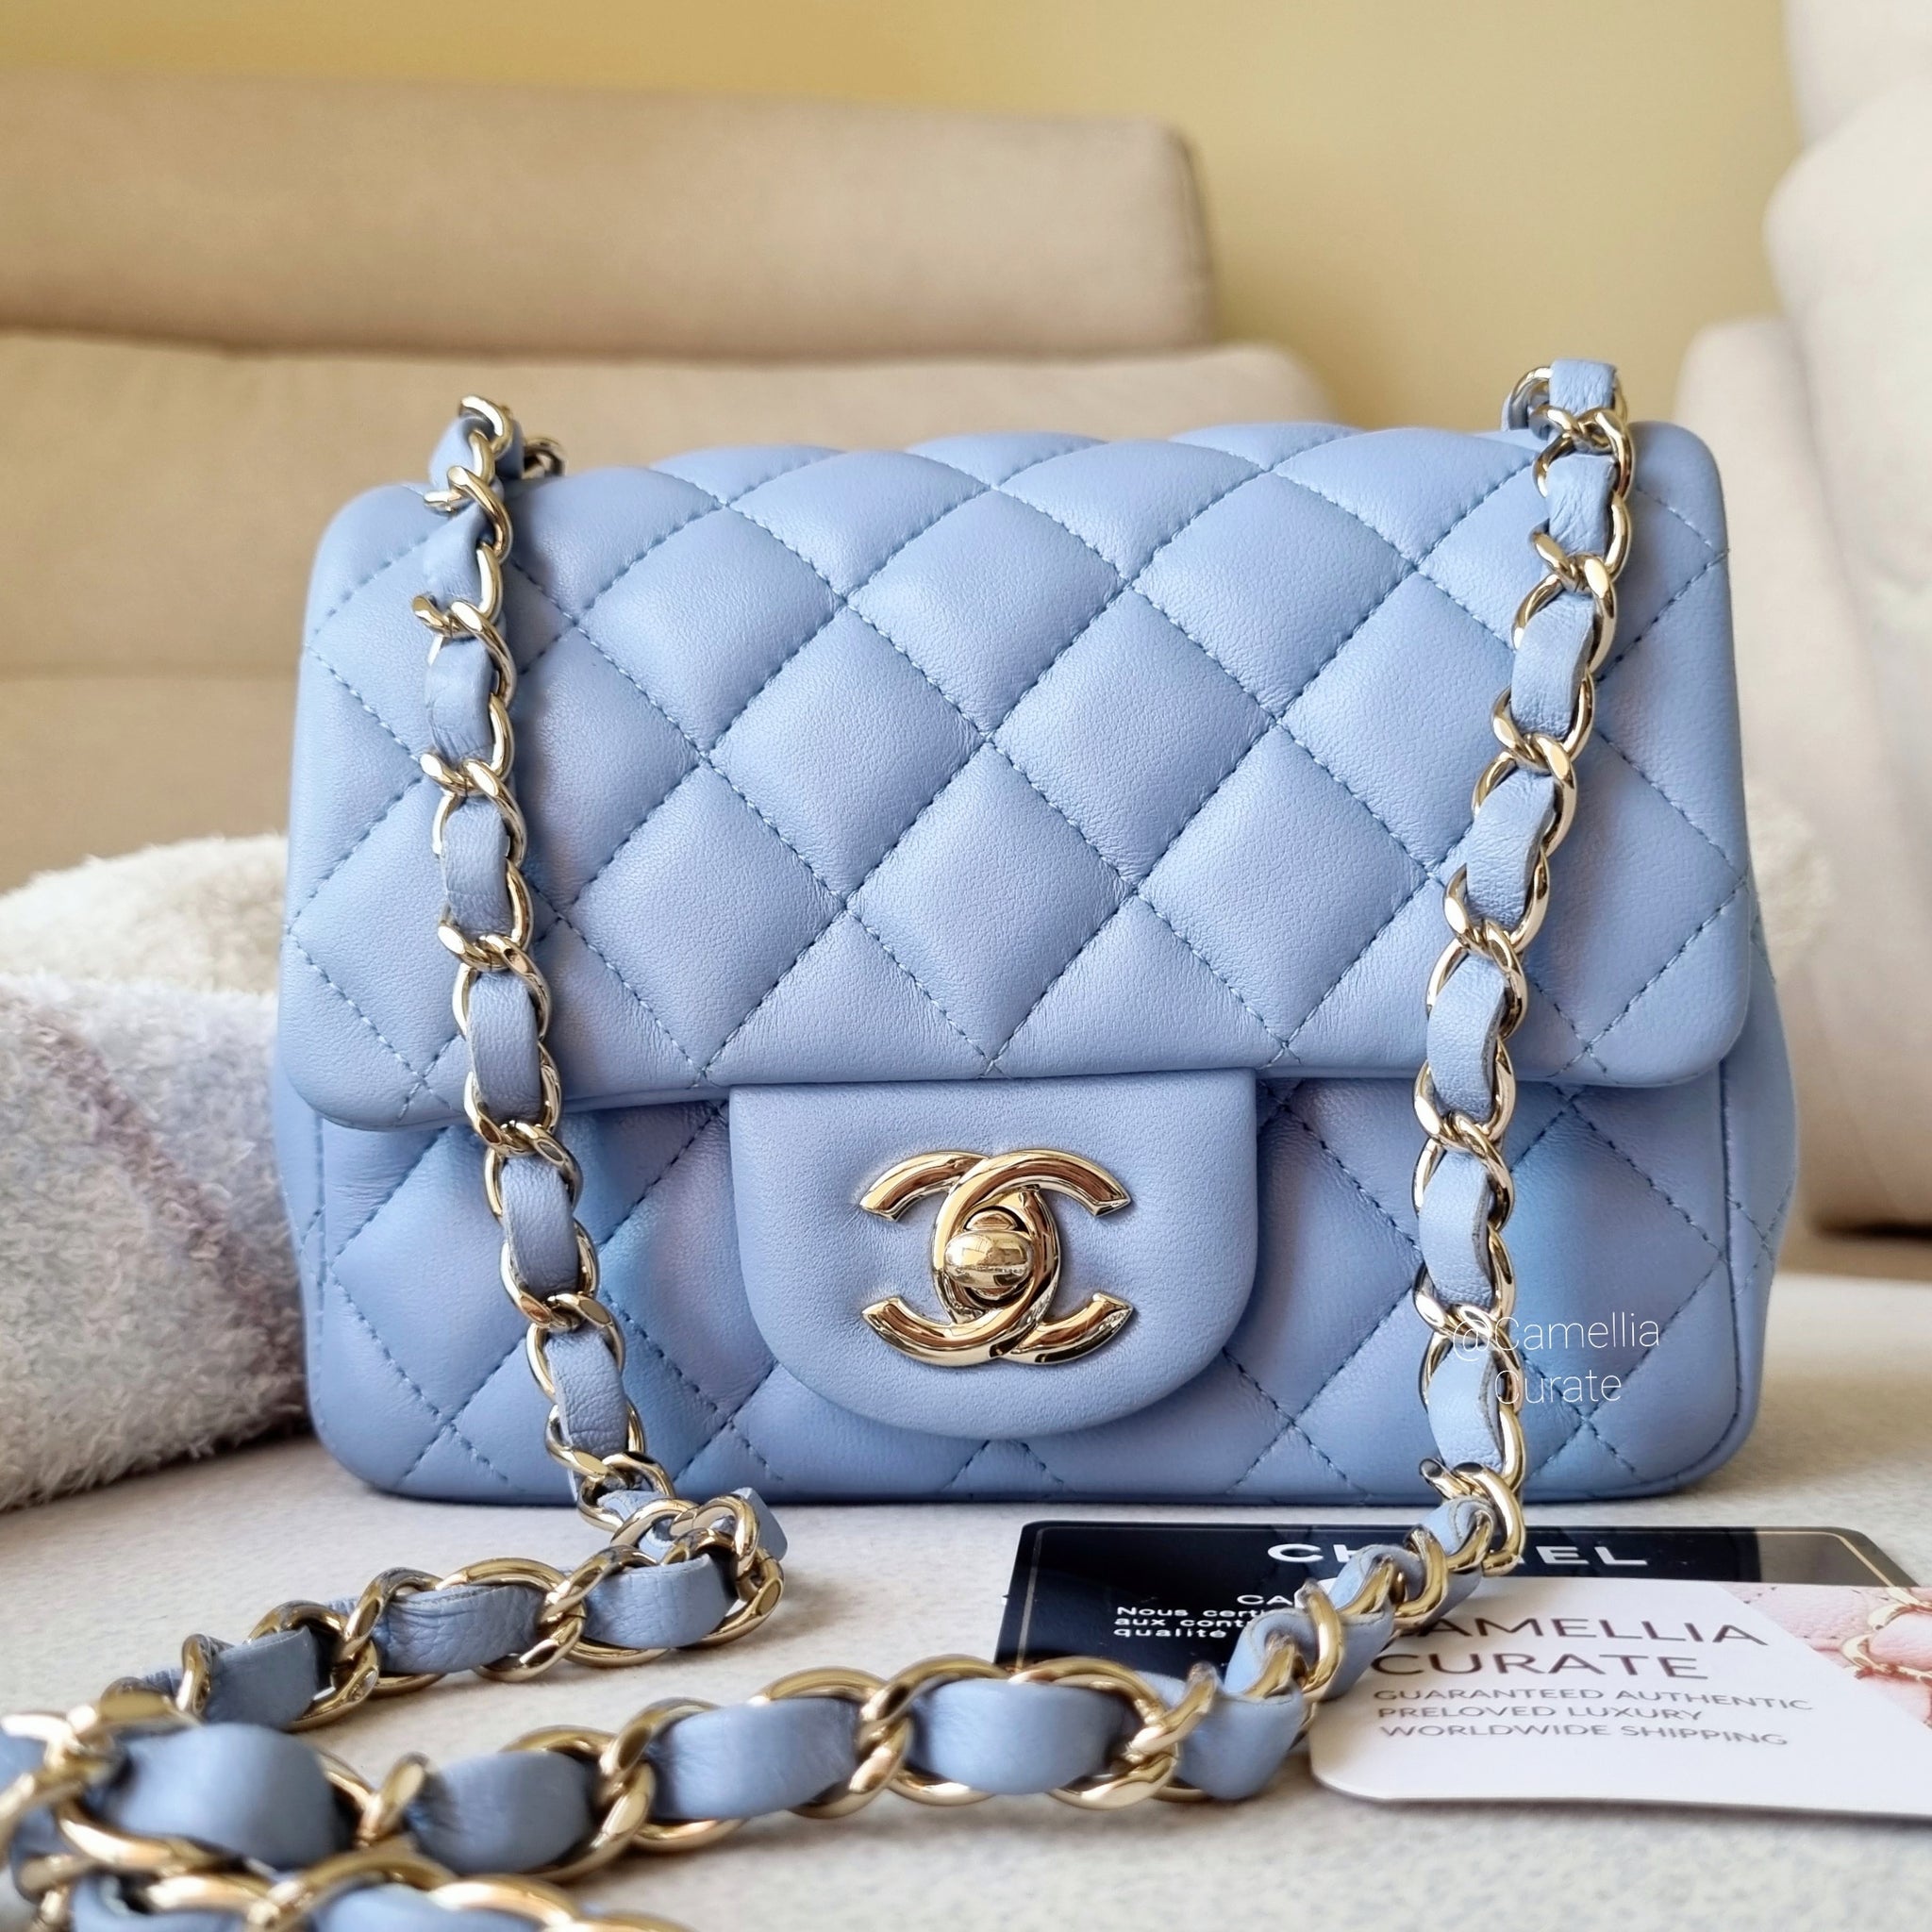 Paolina on Instagram: “Tiffany blue Chanel 19 feels home